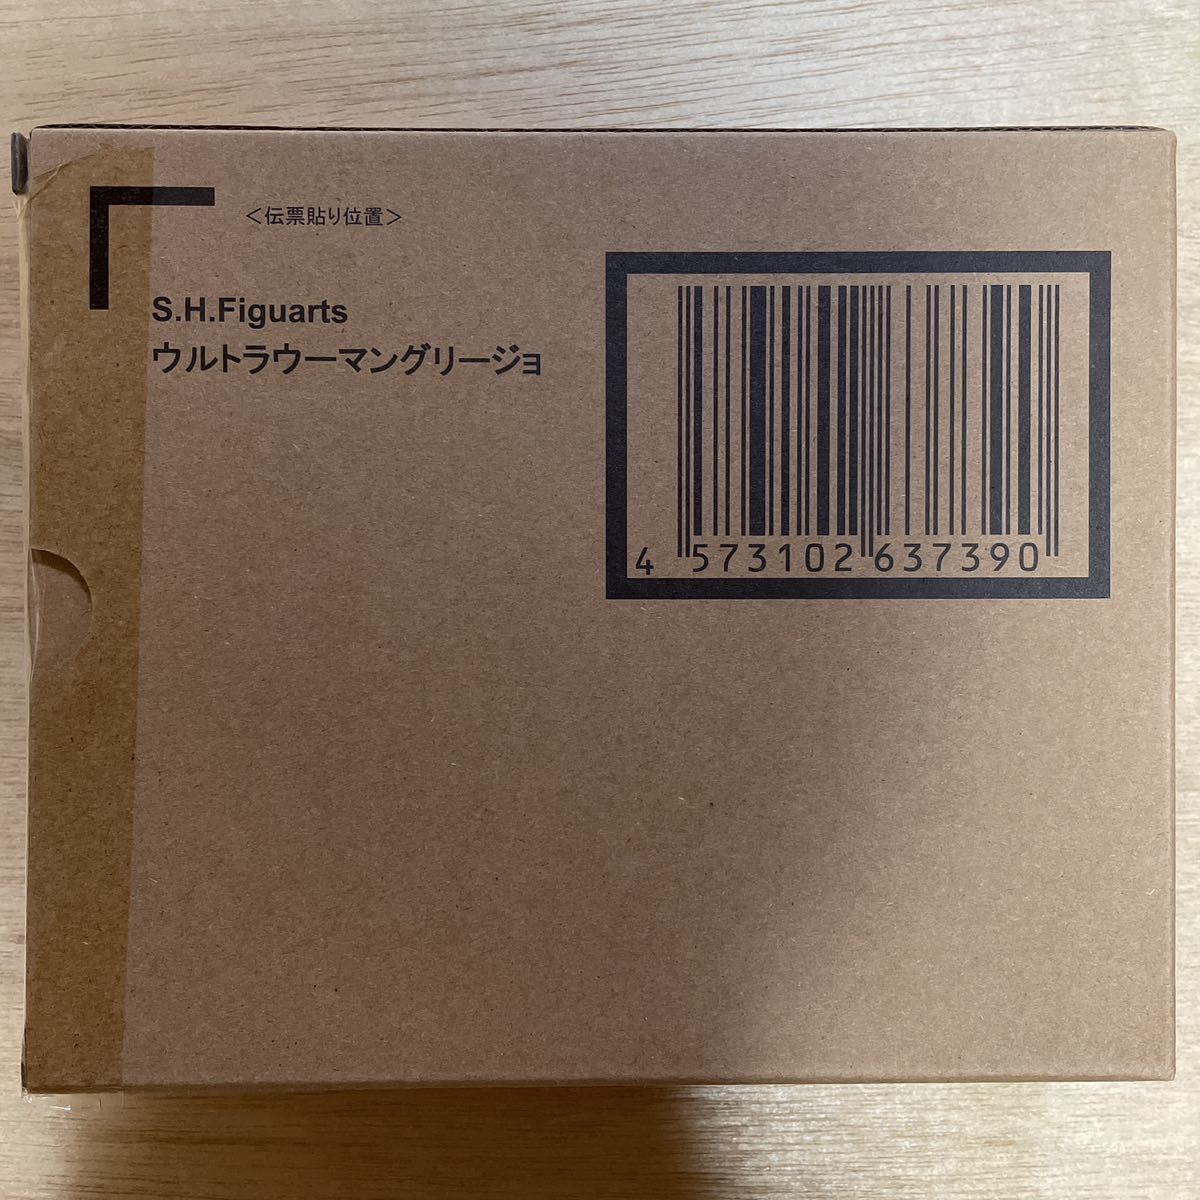  новый товар перевозка коробка нераспечатанный S.H.Figuarts Ultra u- man Gree jo figuarts фигурка Ultraman Zero Ultraman Gree jo